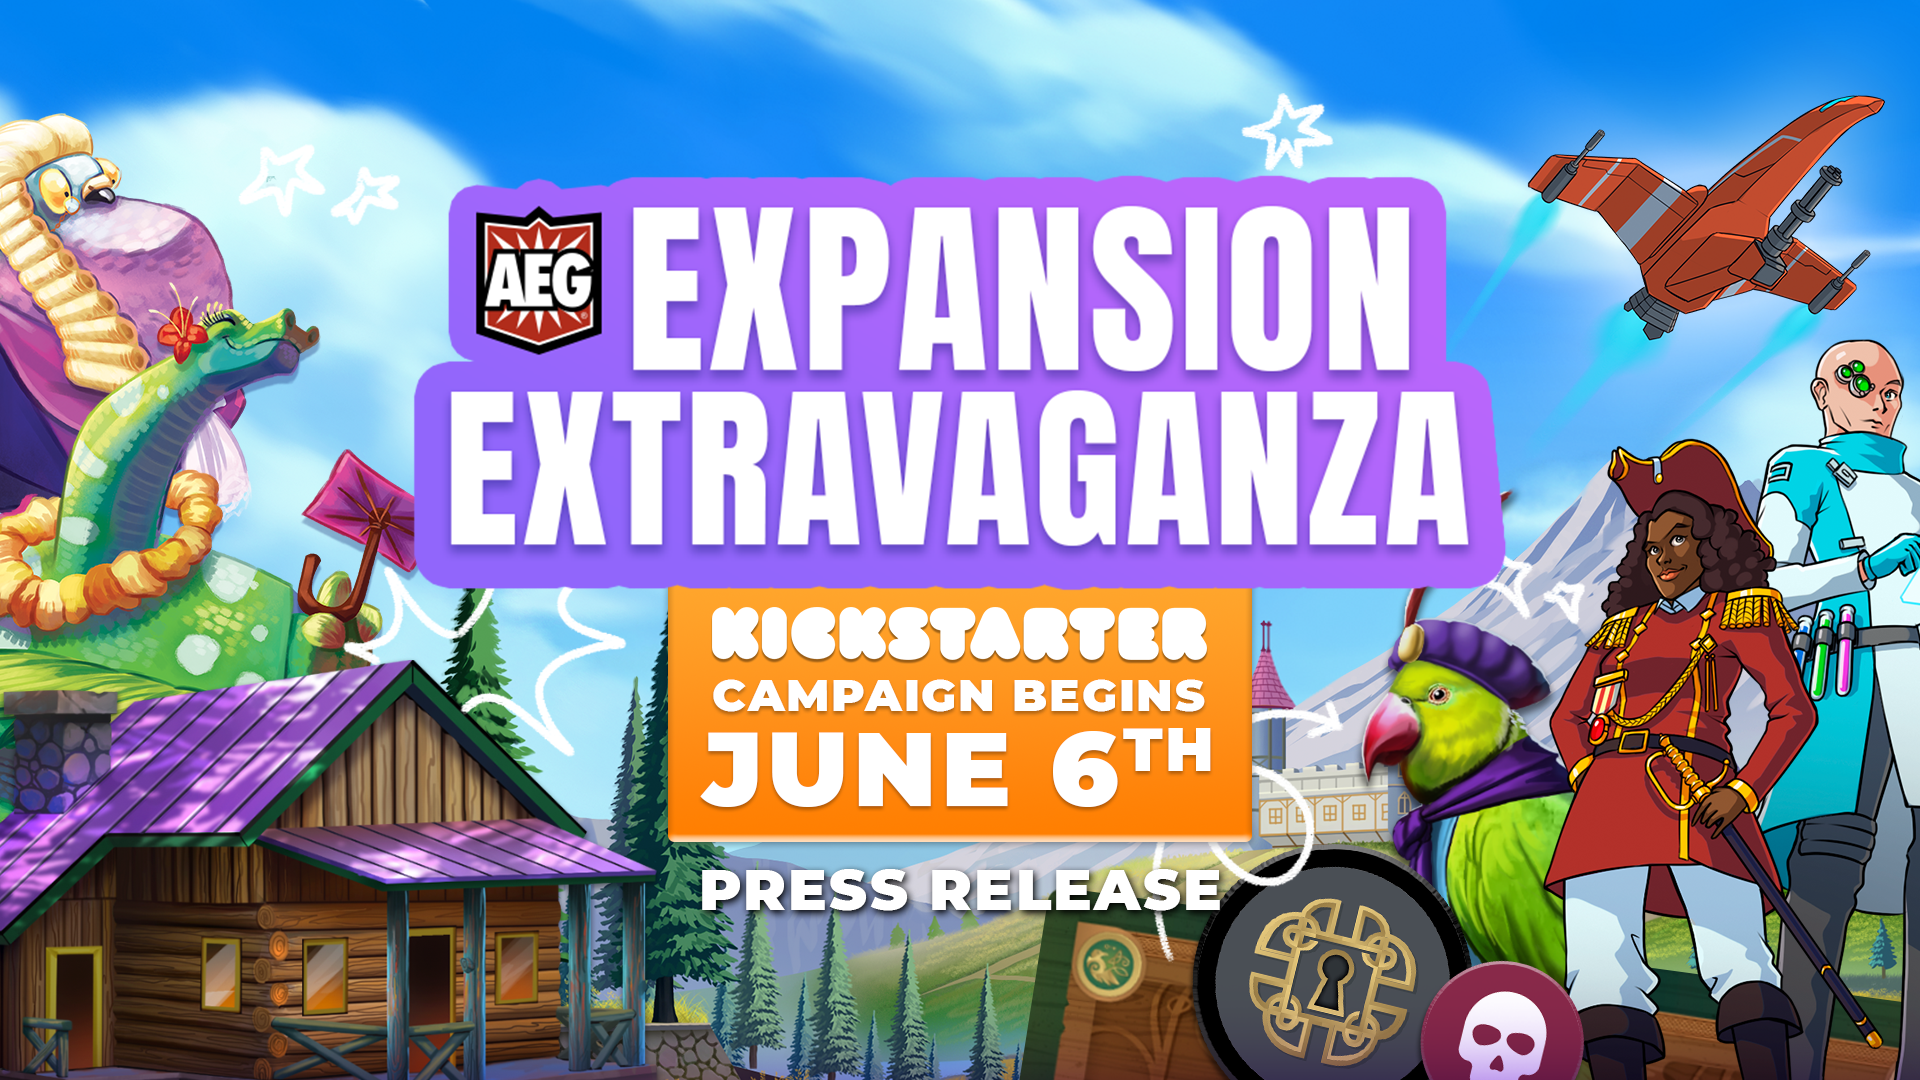 AEG Expansion Extravaganza by Alderac Entertainment Group